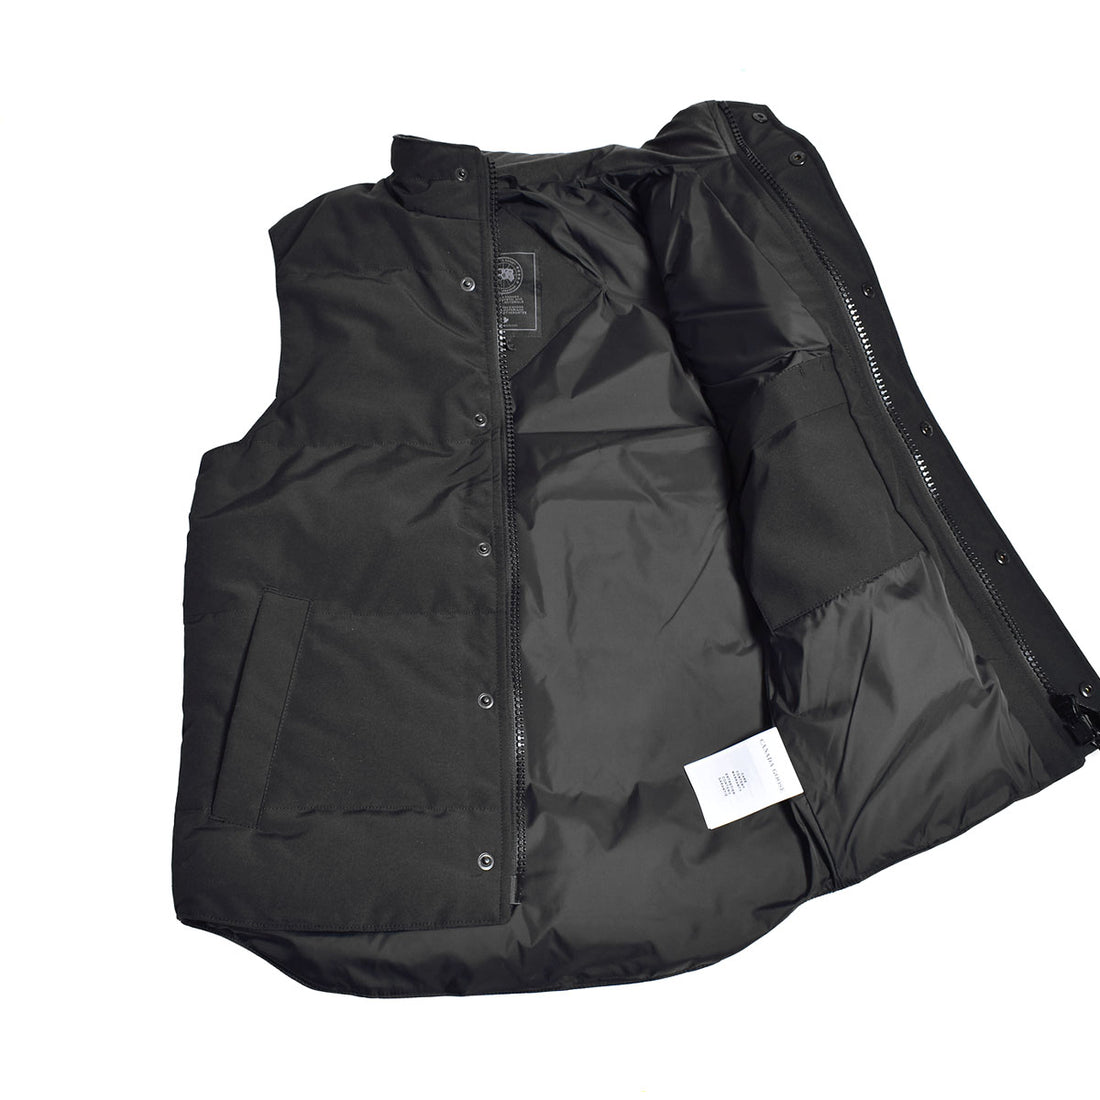 [CANADA GOOSE]Garson Vest Black Label/BLACK(4151MB)